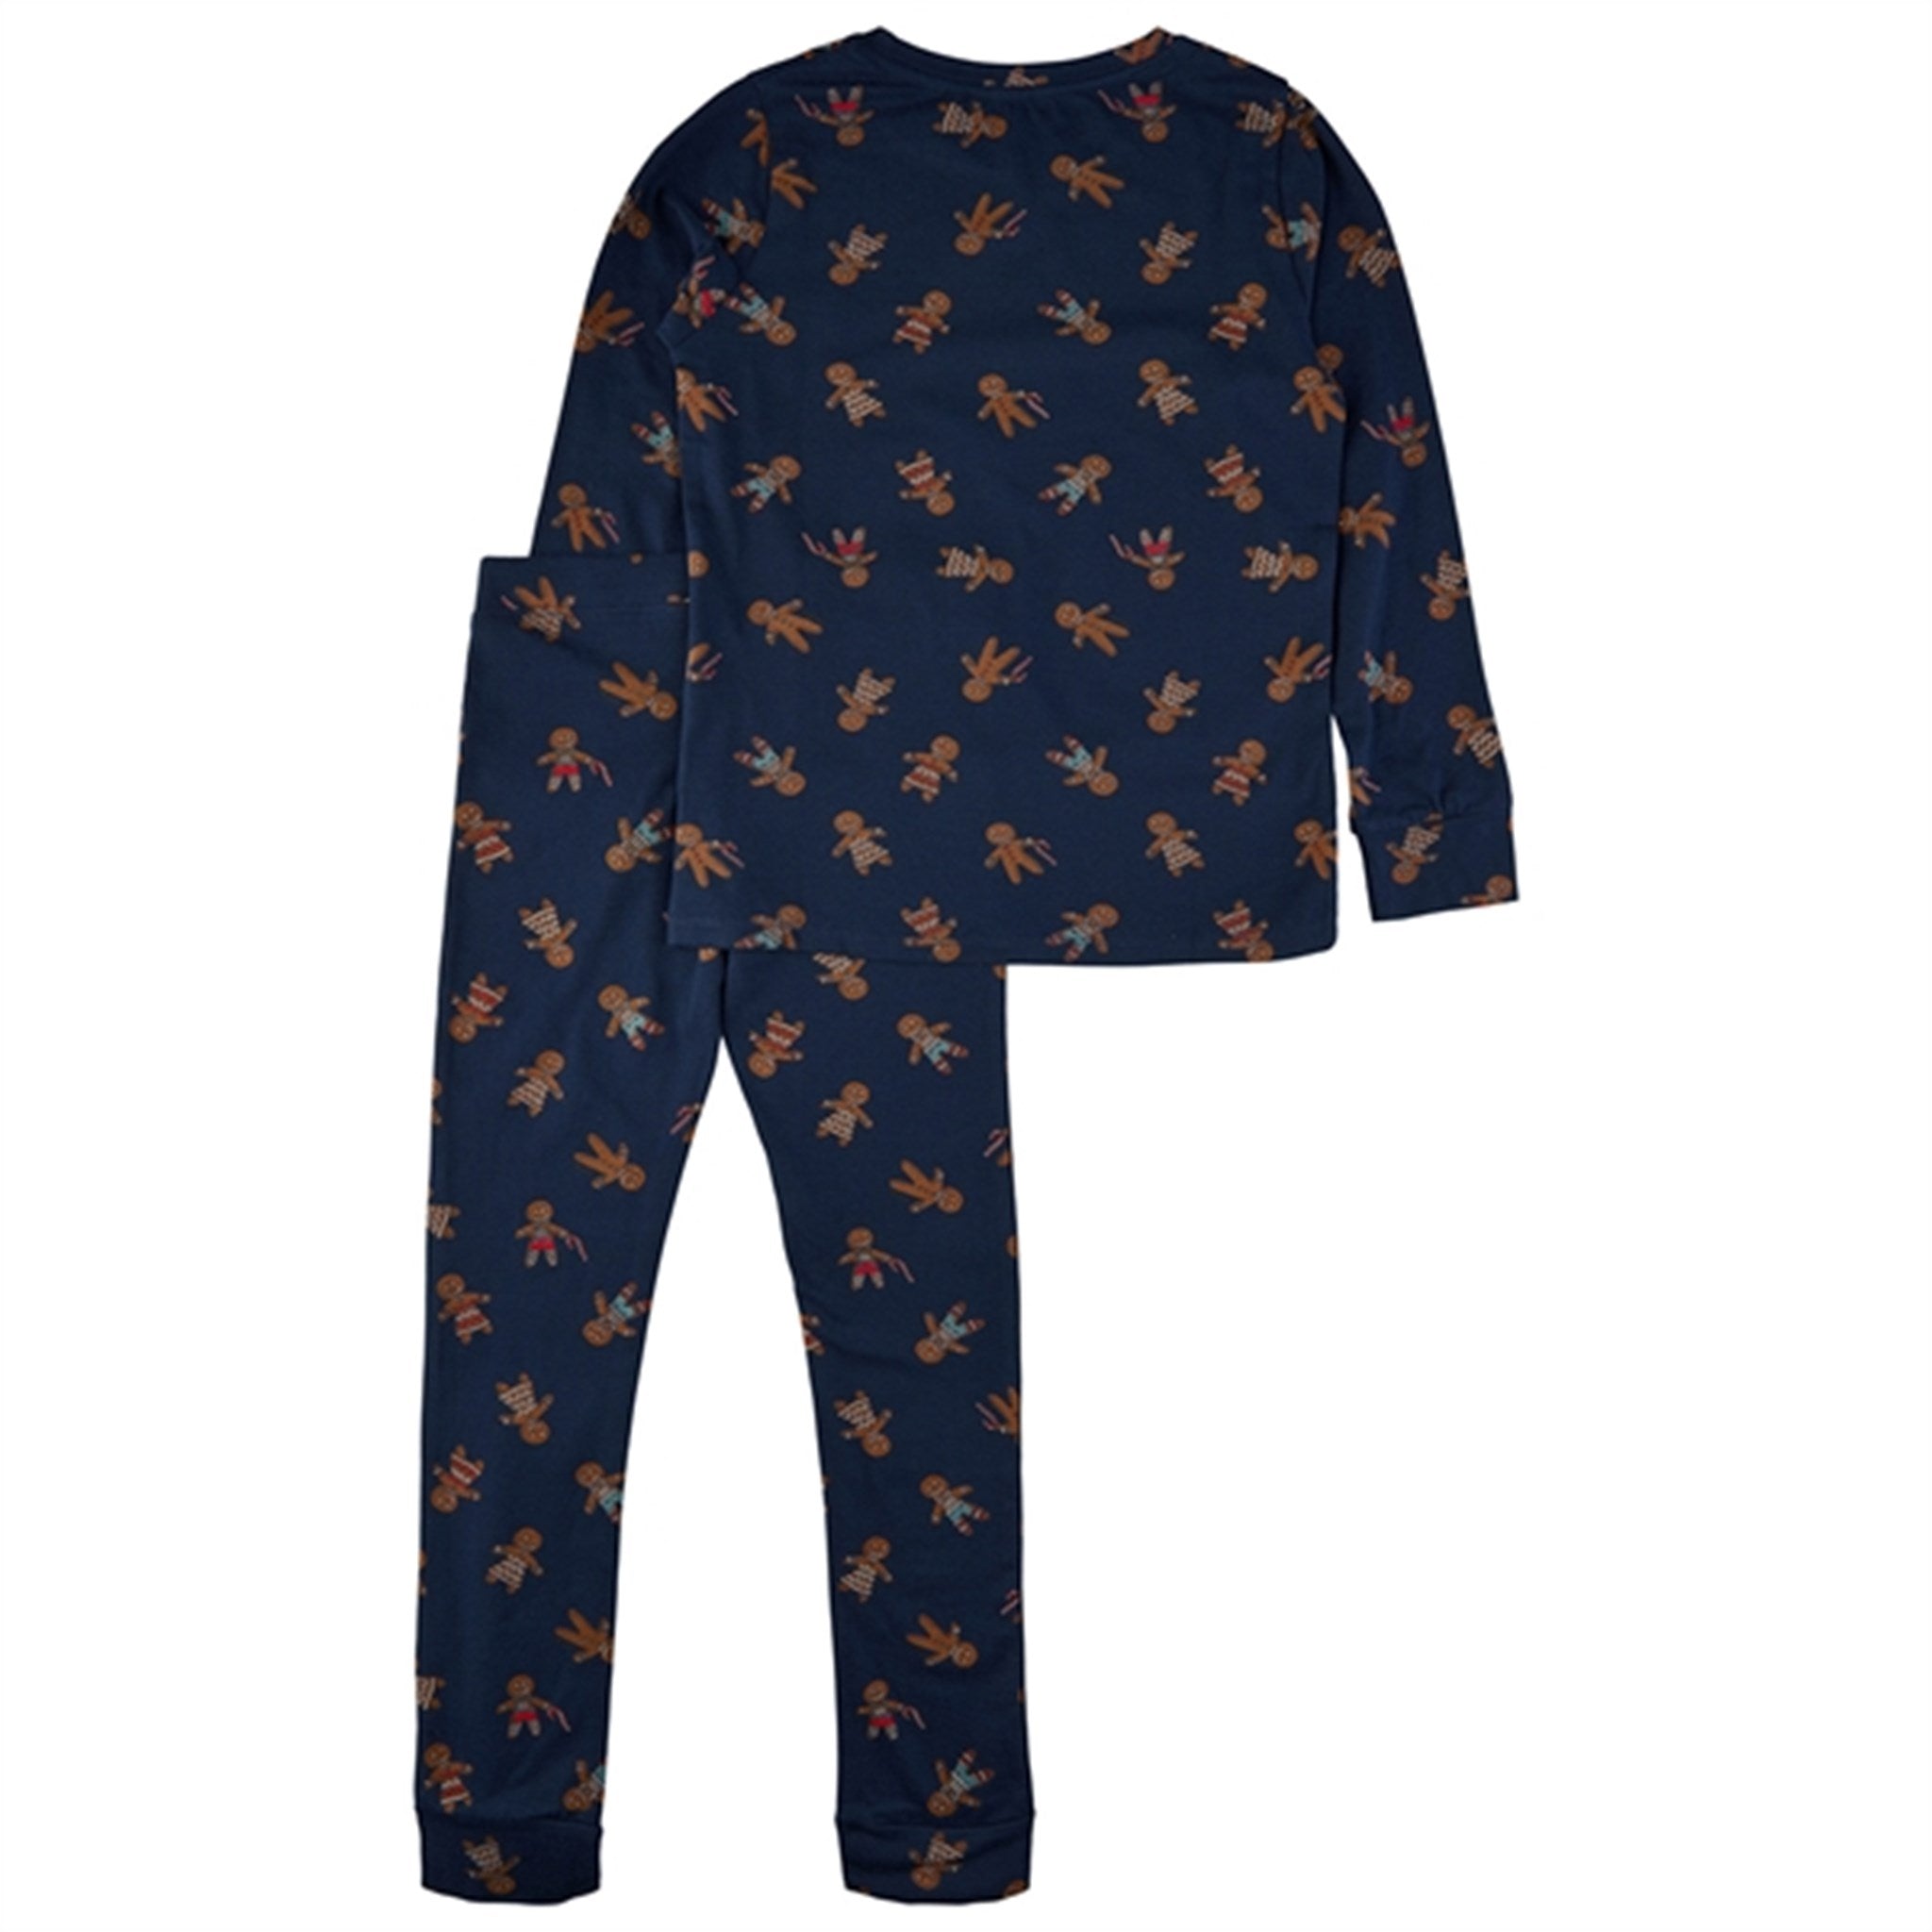 The New Navy Blazer Ginger Aop Holiday Pyjamas 2